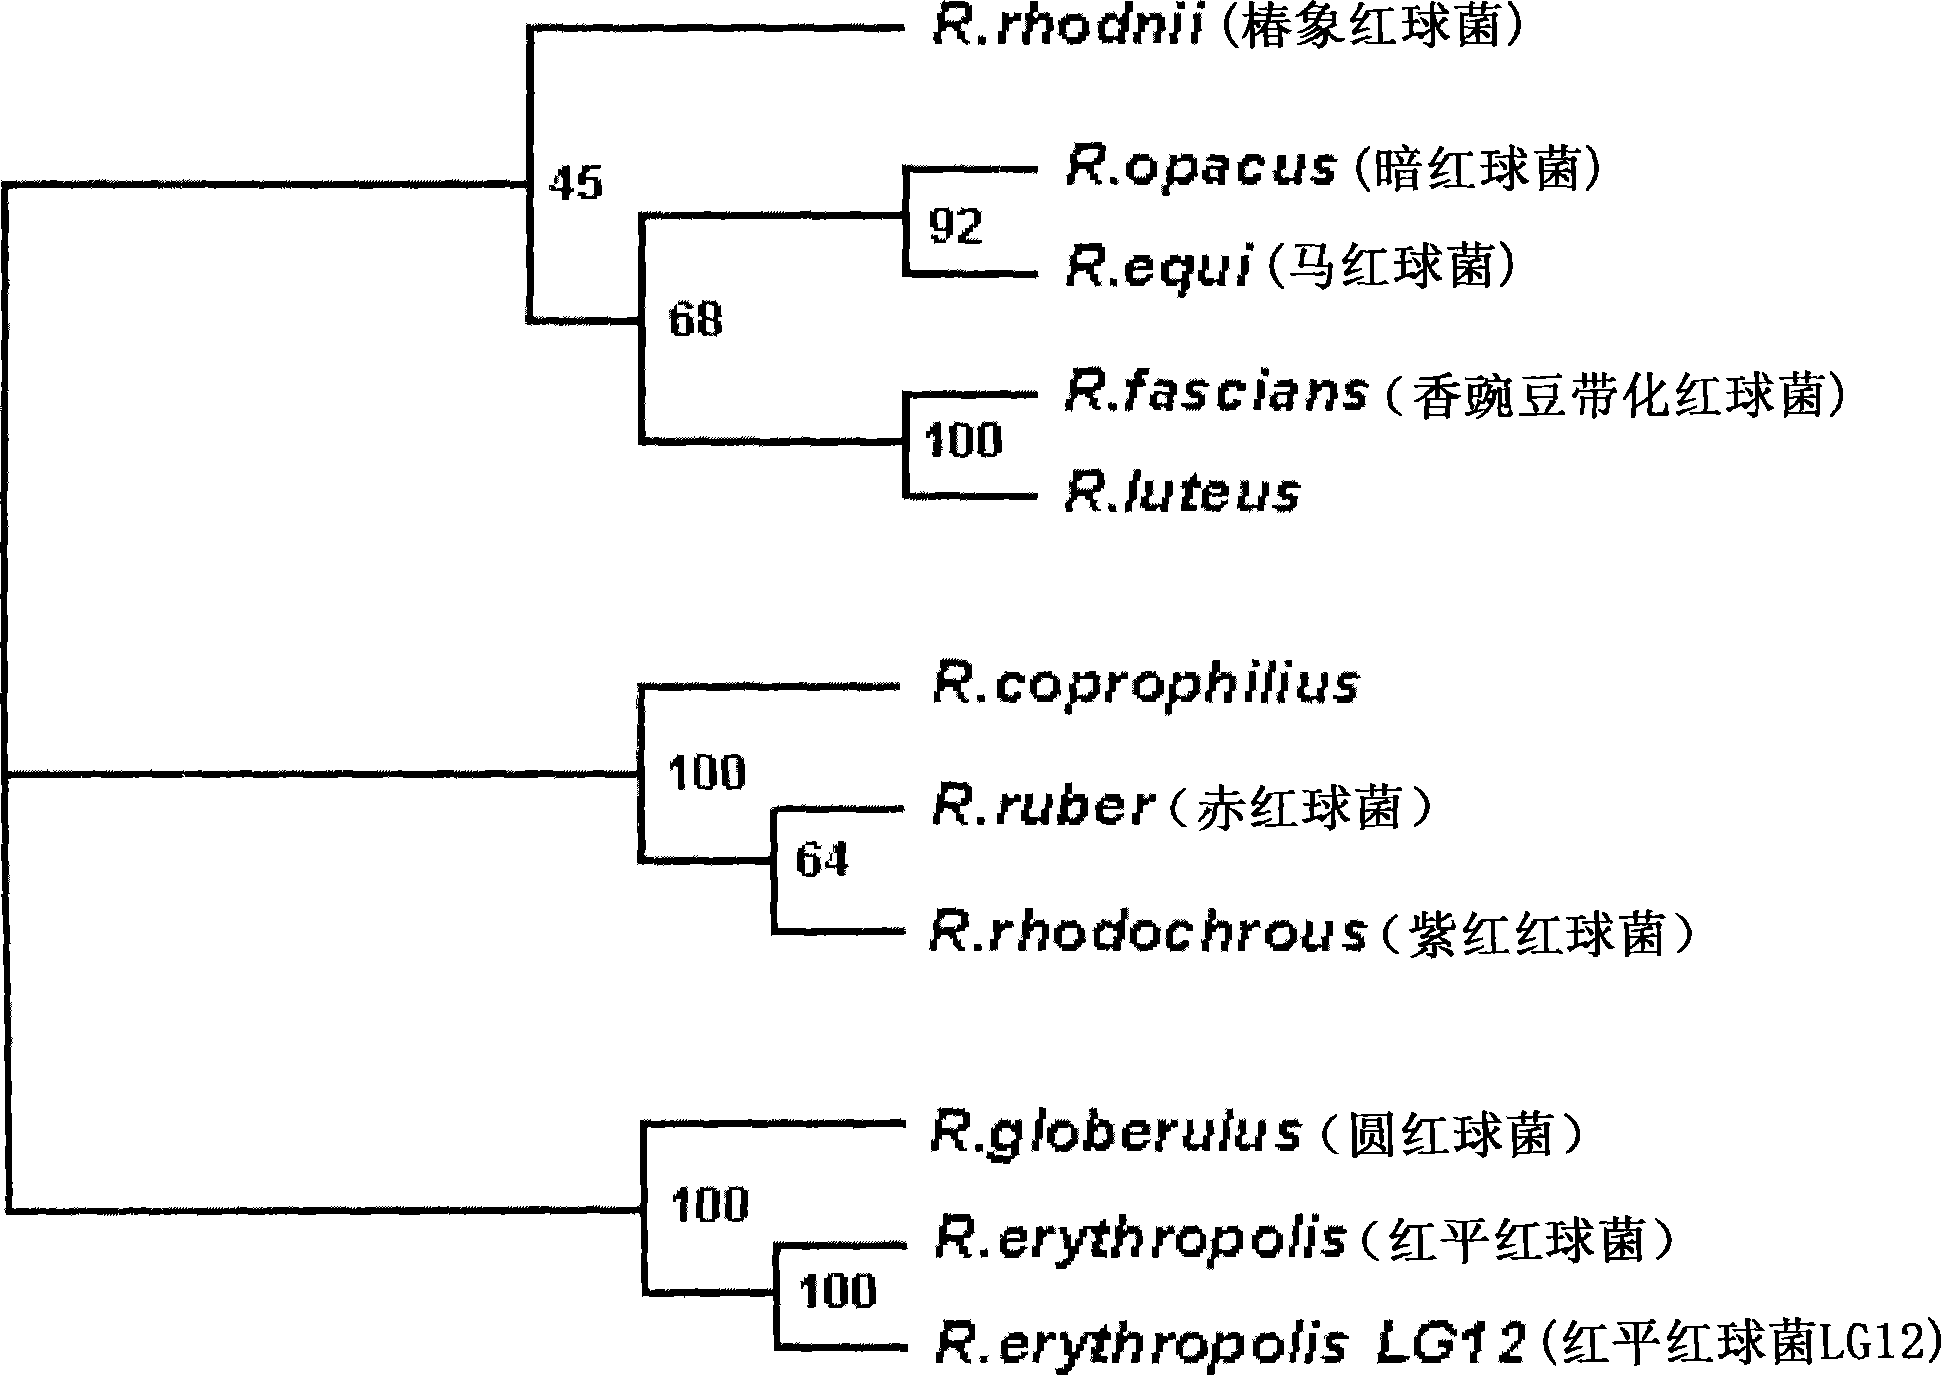 Rhodococcus erythropolis LG12 having acrylic acid degrading activity and method for removing acrylic acid using the same